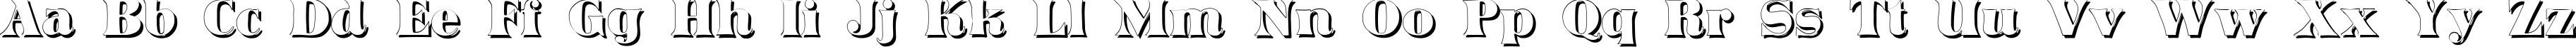 Пример написания английского алфавита шрифтом Domino Shadow